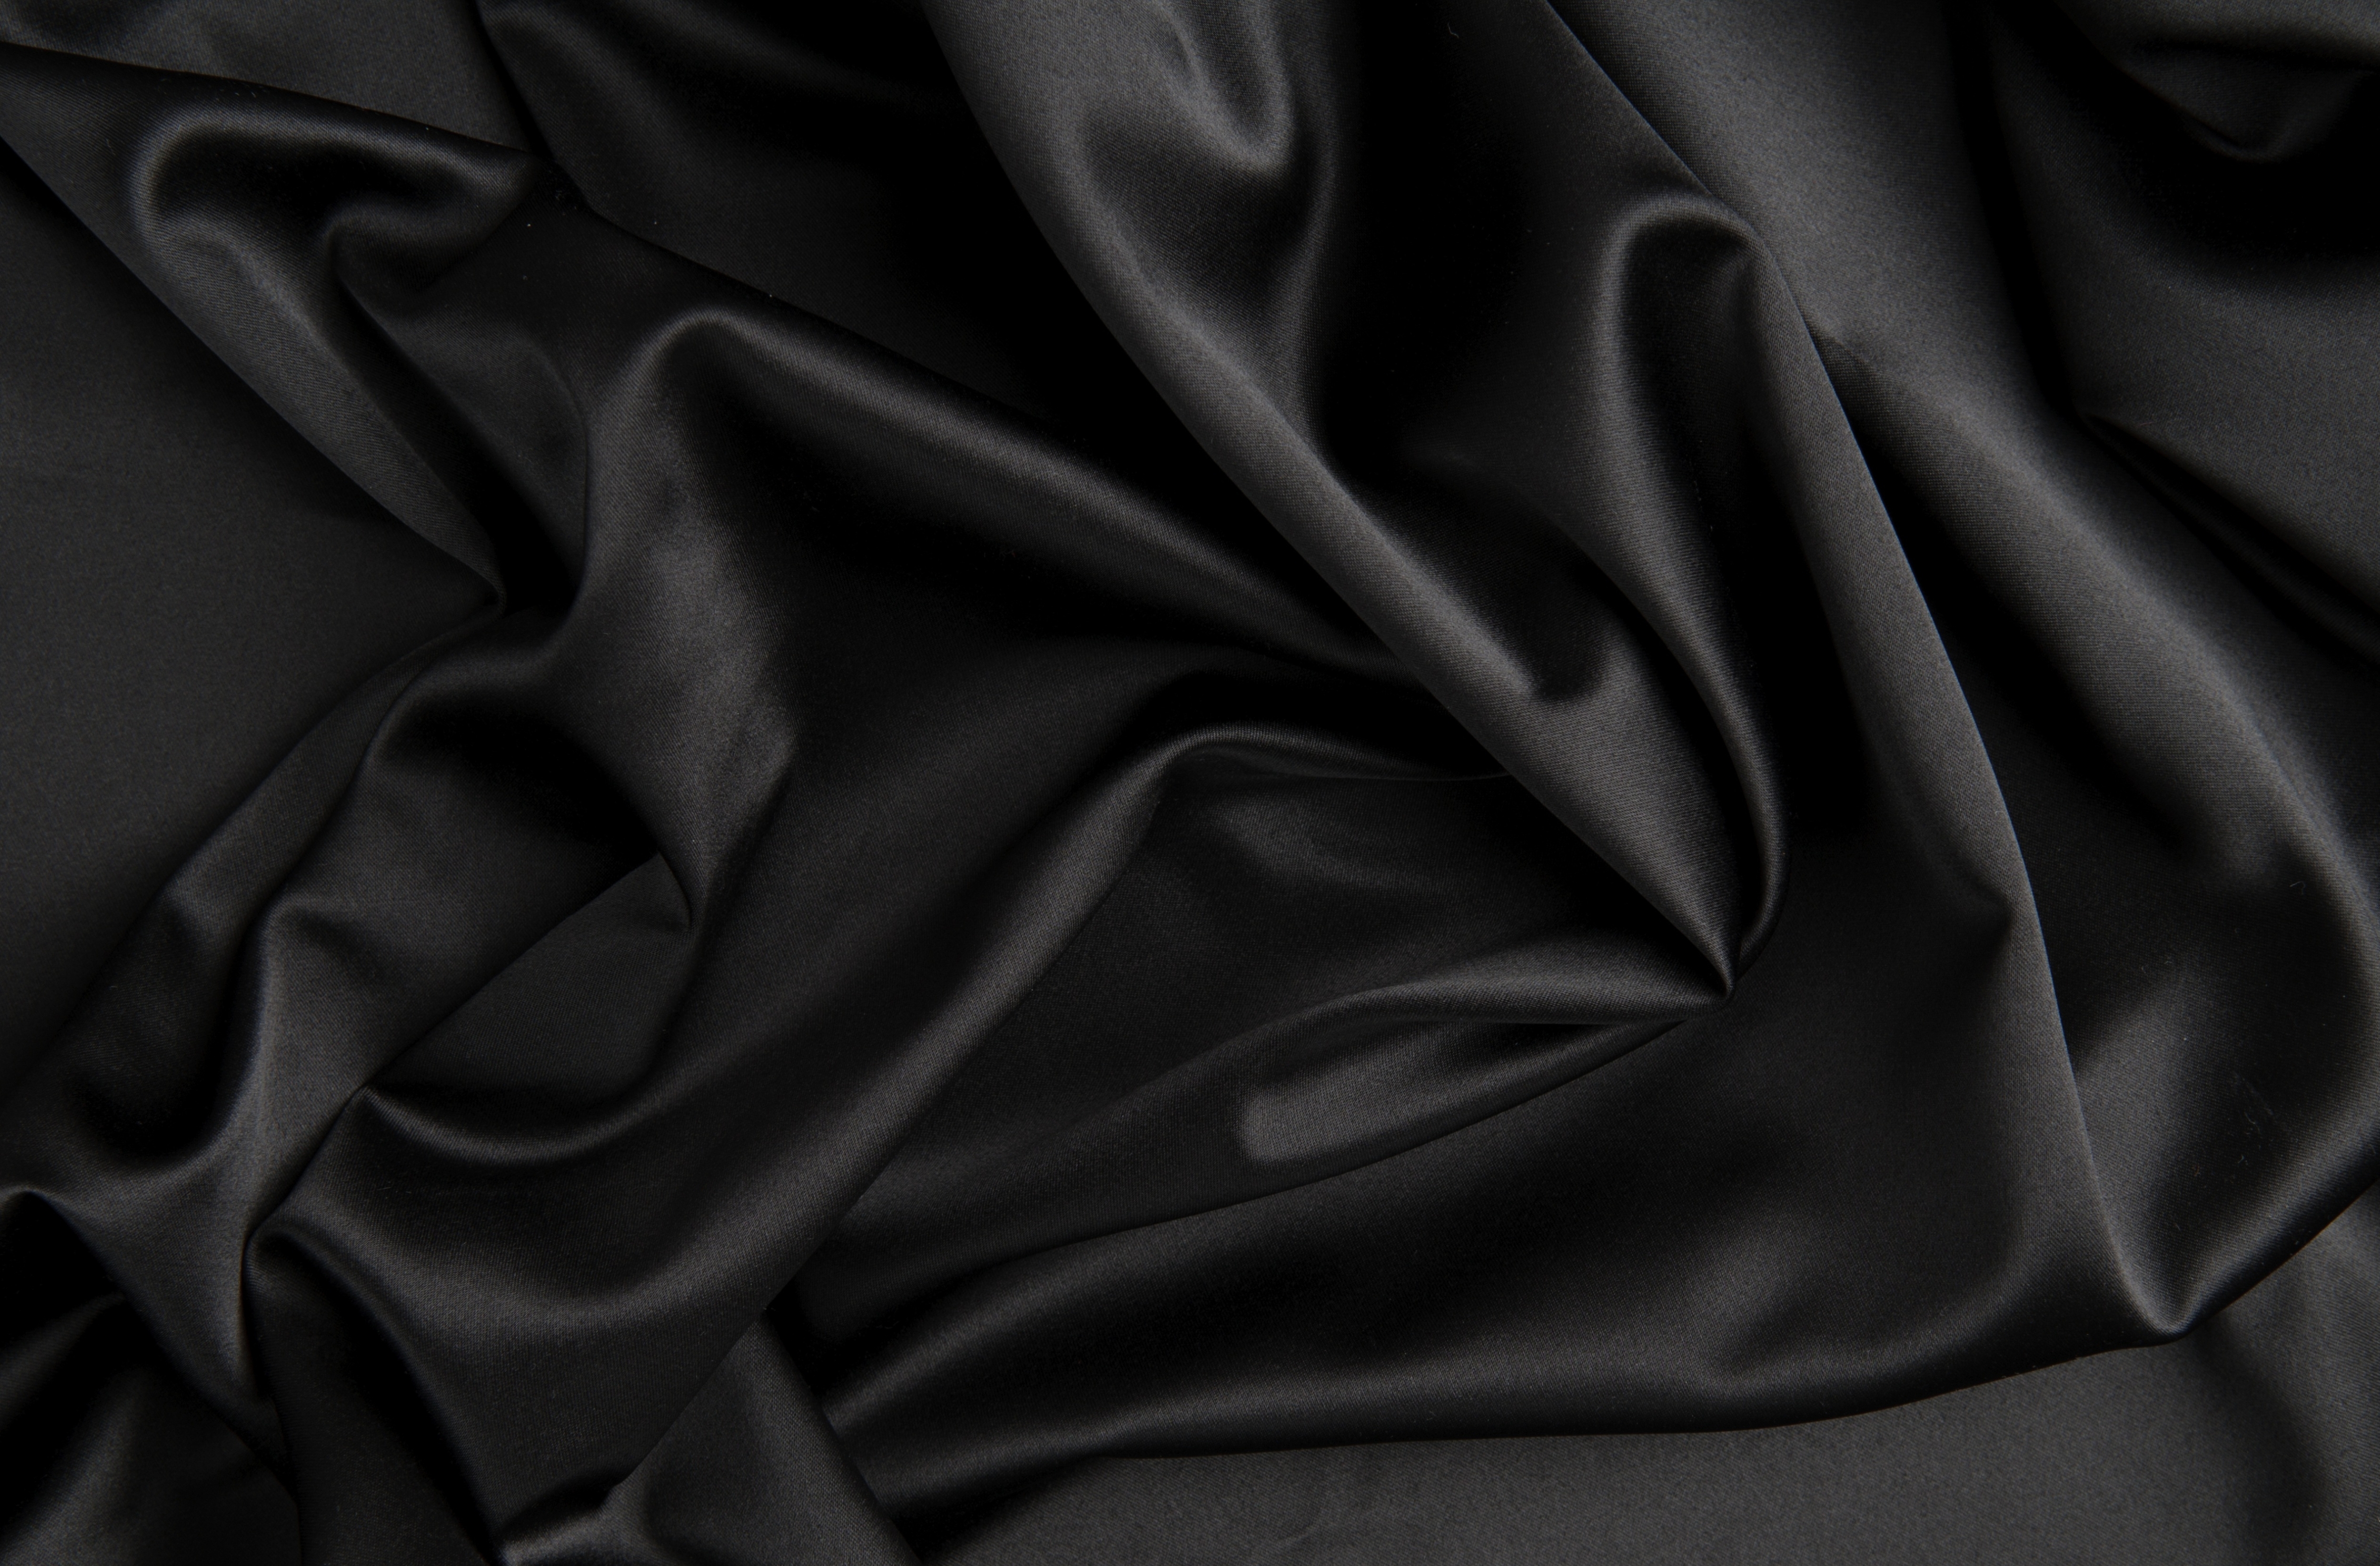 Silk satin cloth black folds texture wallpaper   ForWallpapercom